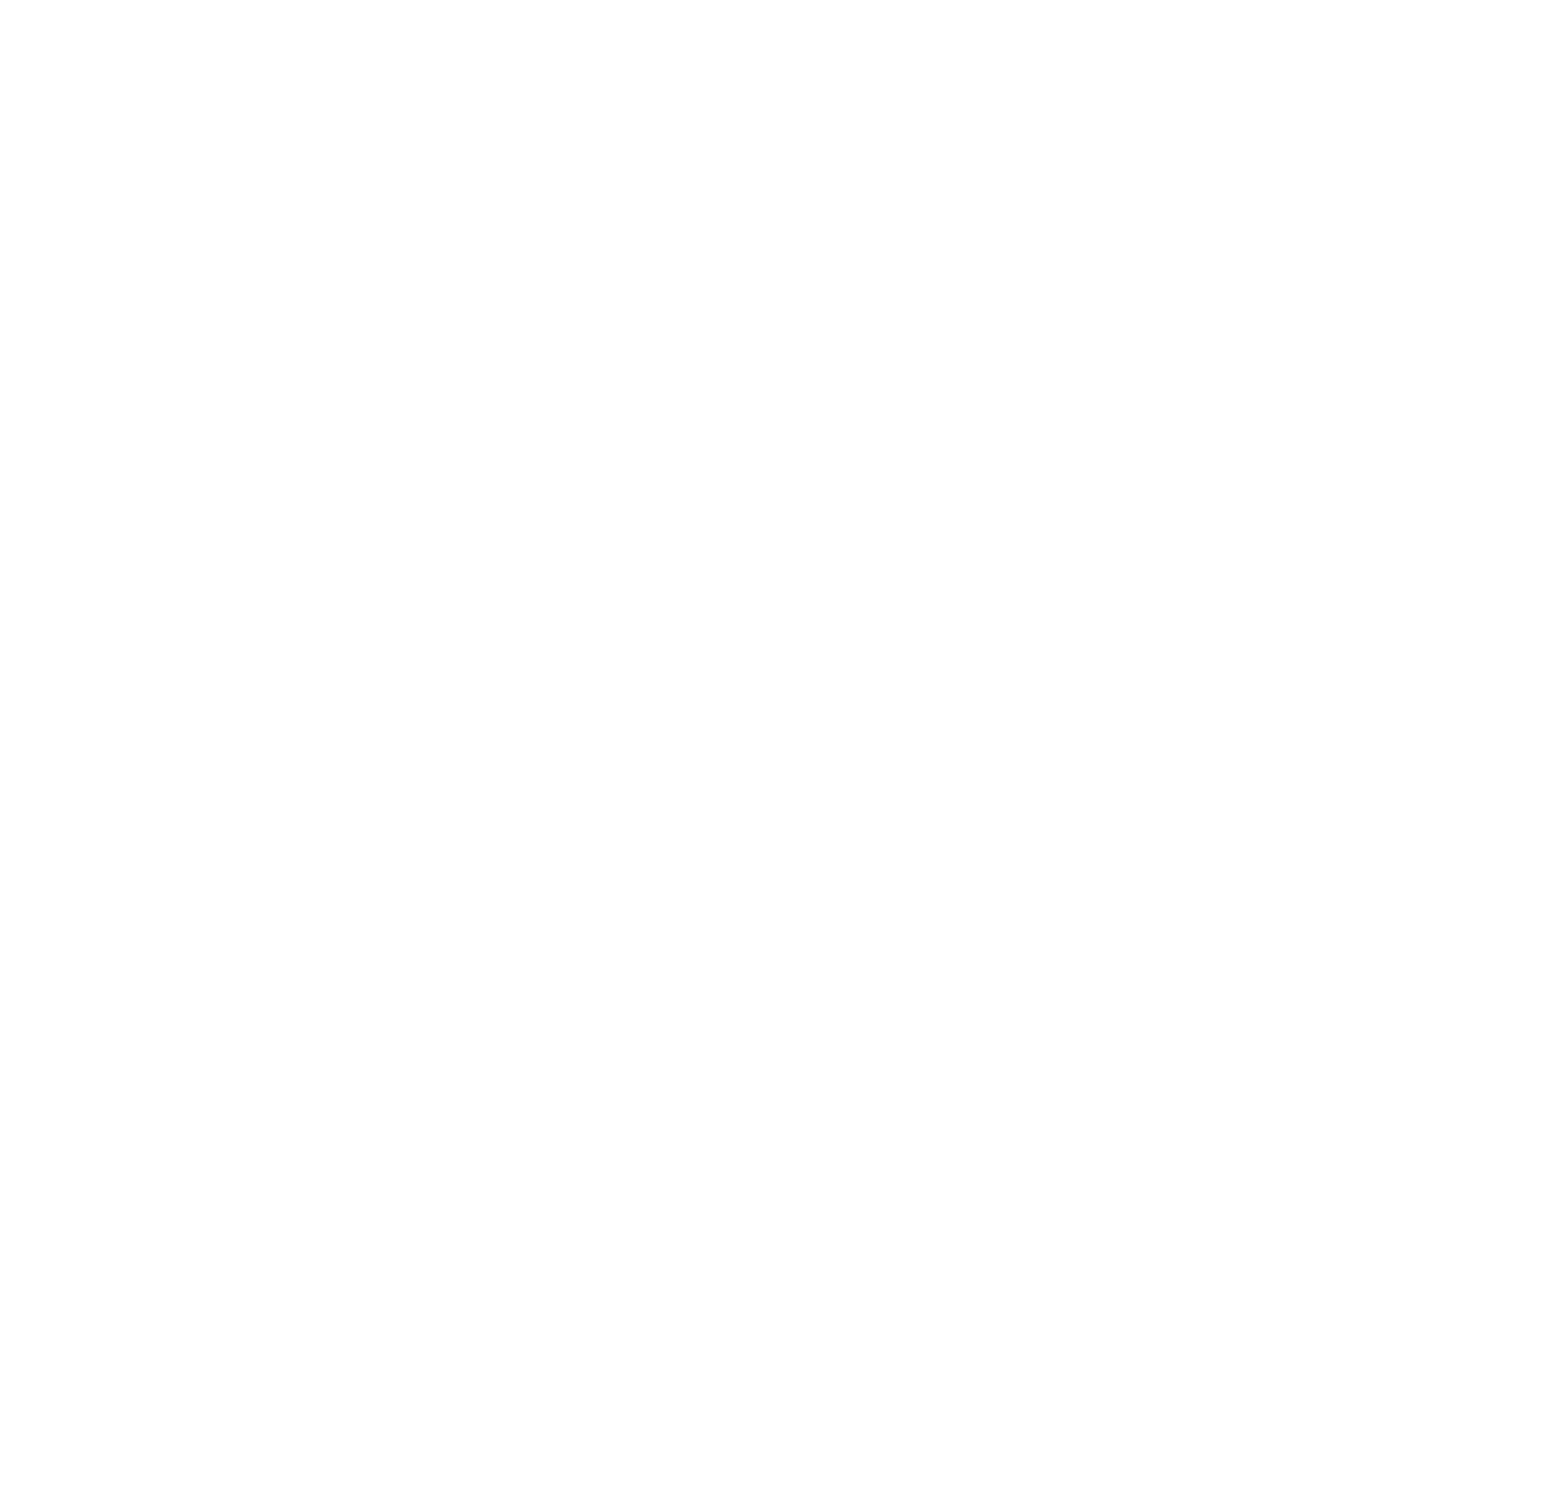 Postmedia Network Canada logo pour fonds sombres (PNG transparent)